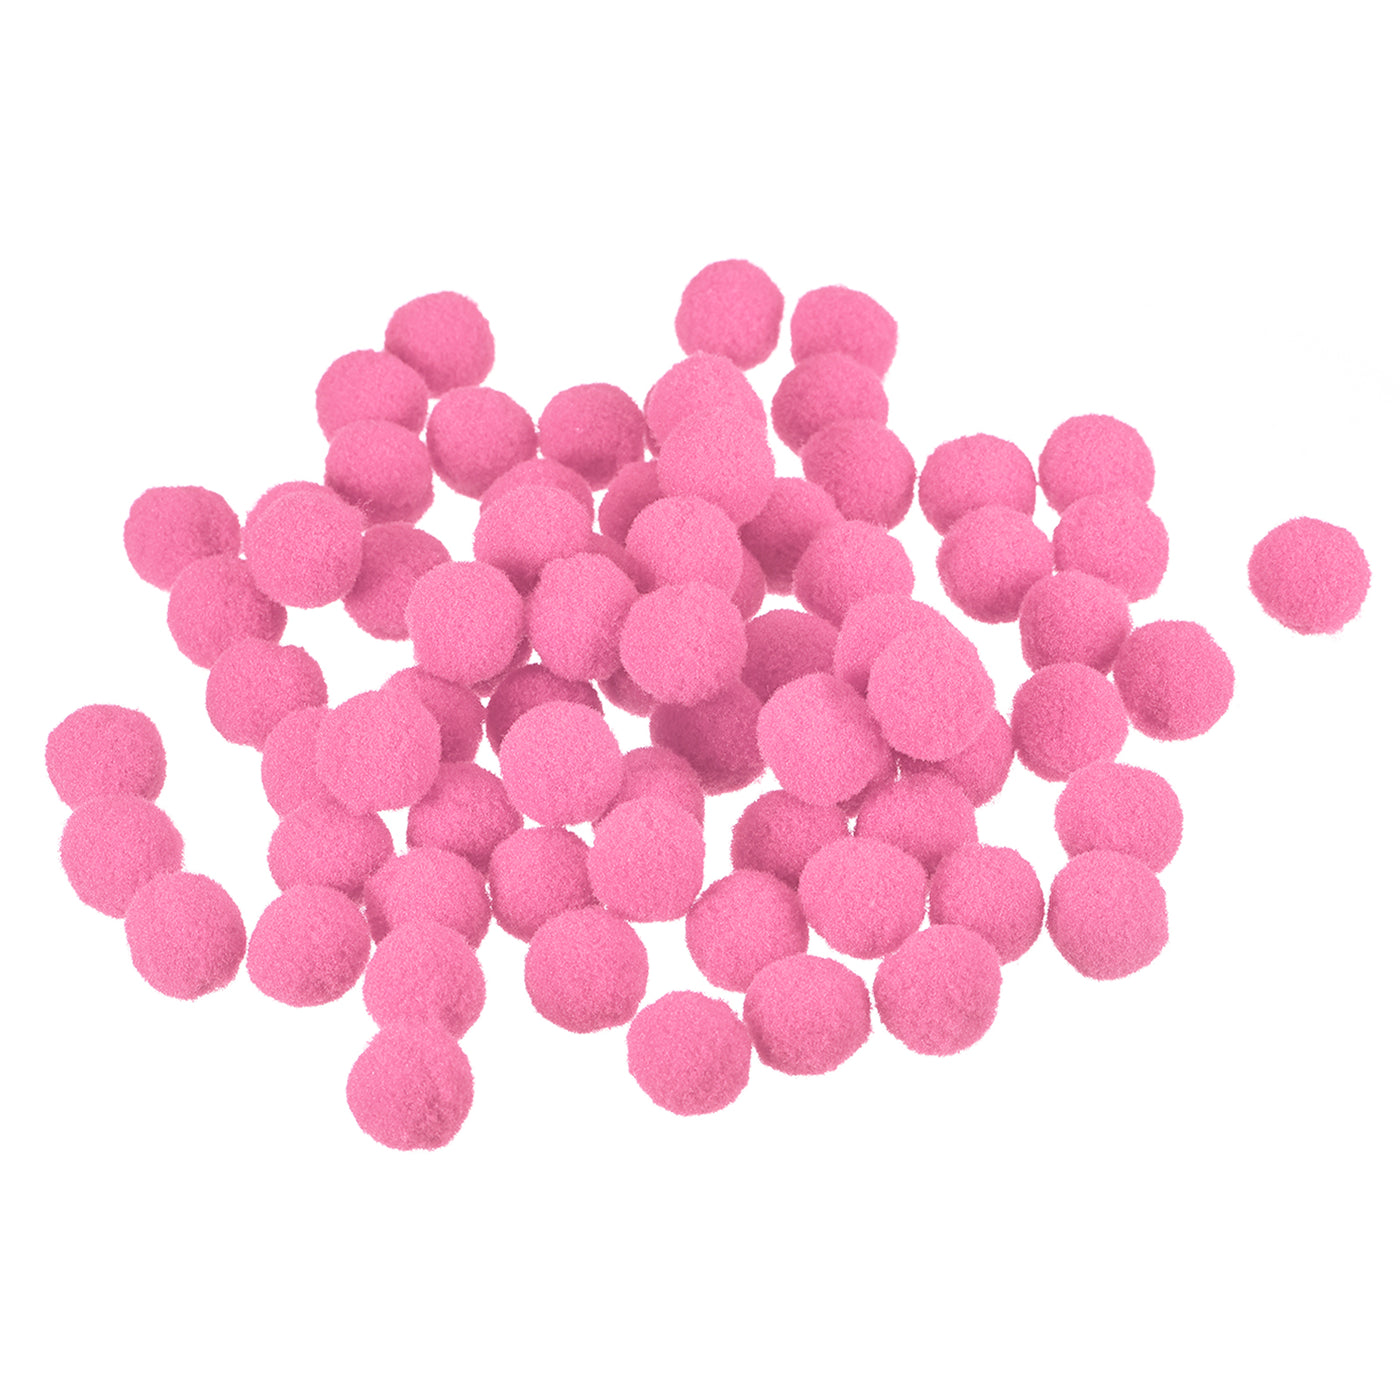 Harfington Pom Felt Balls Fabric 1.5cm 15mm Pink for Crafts Project DIY 200 Pcs